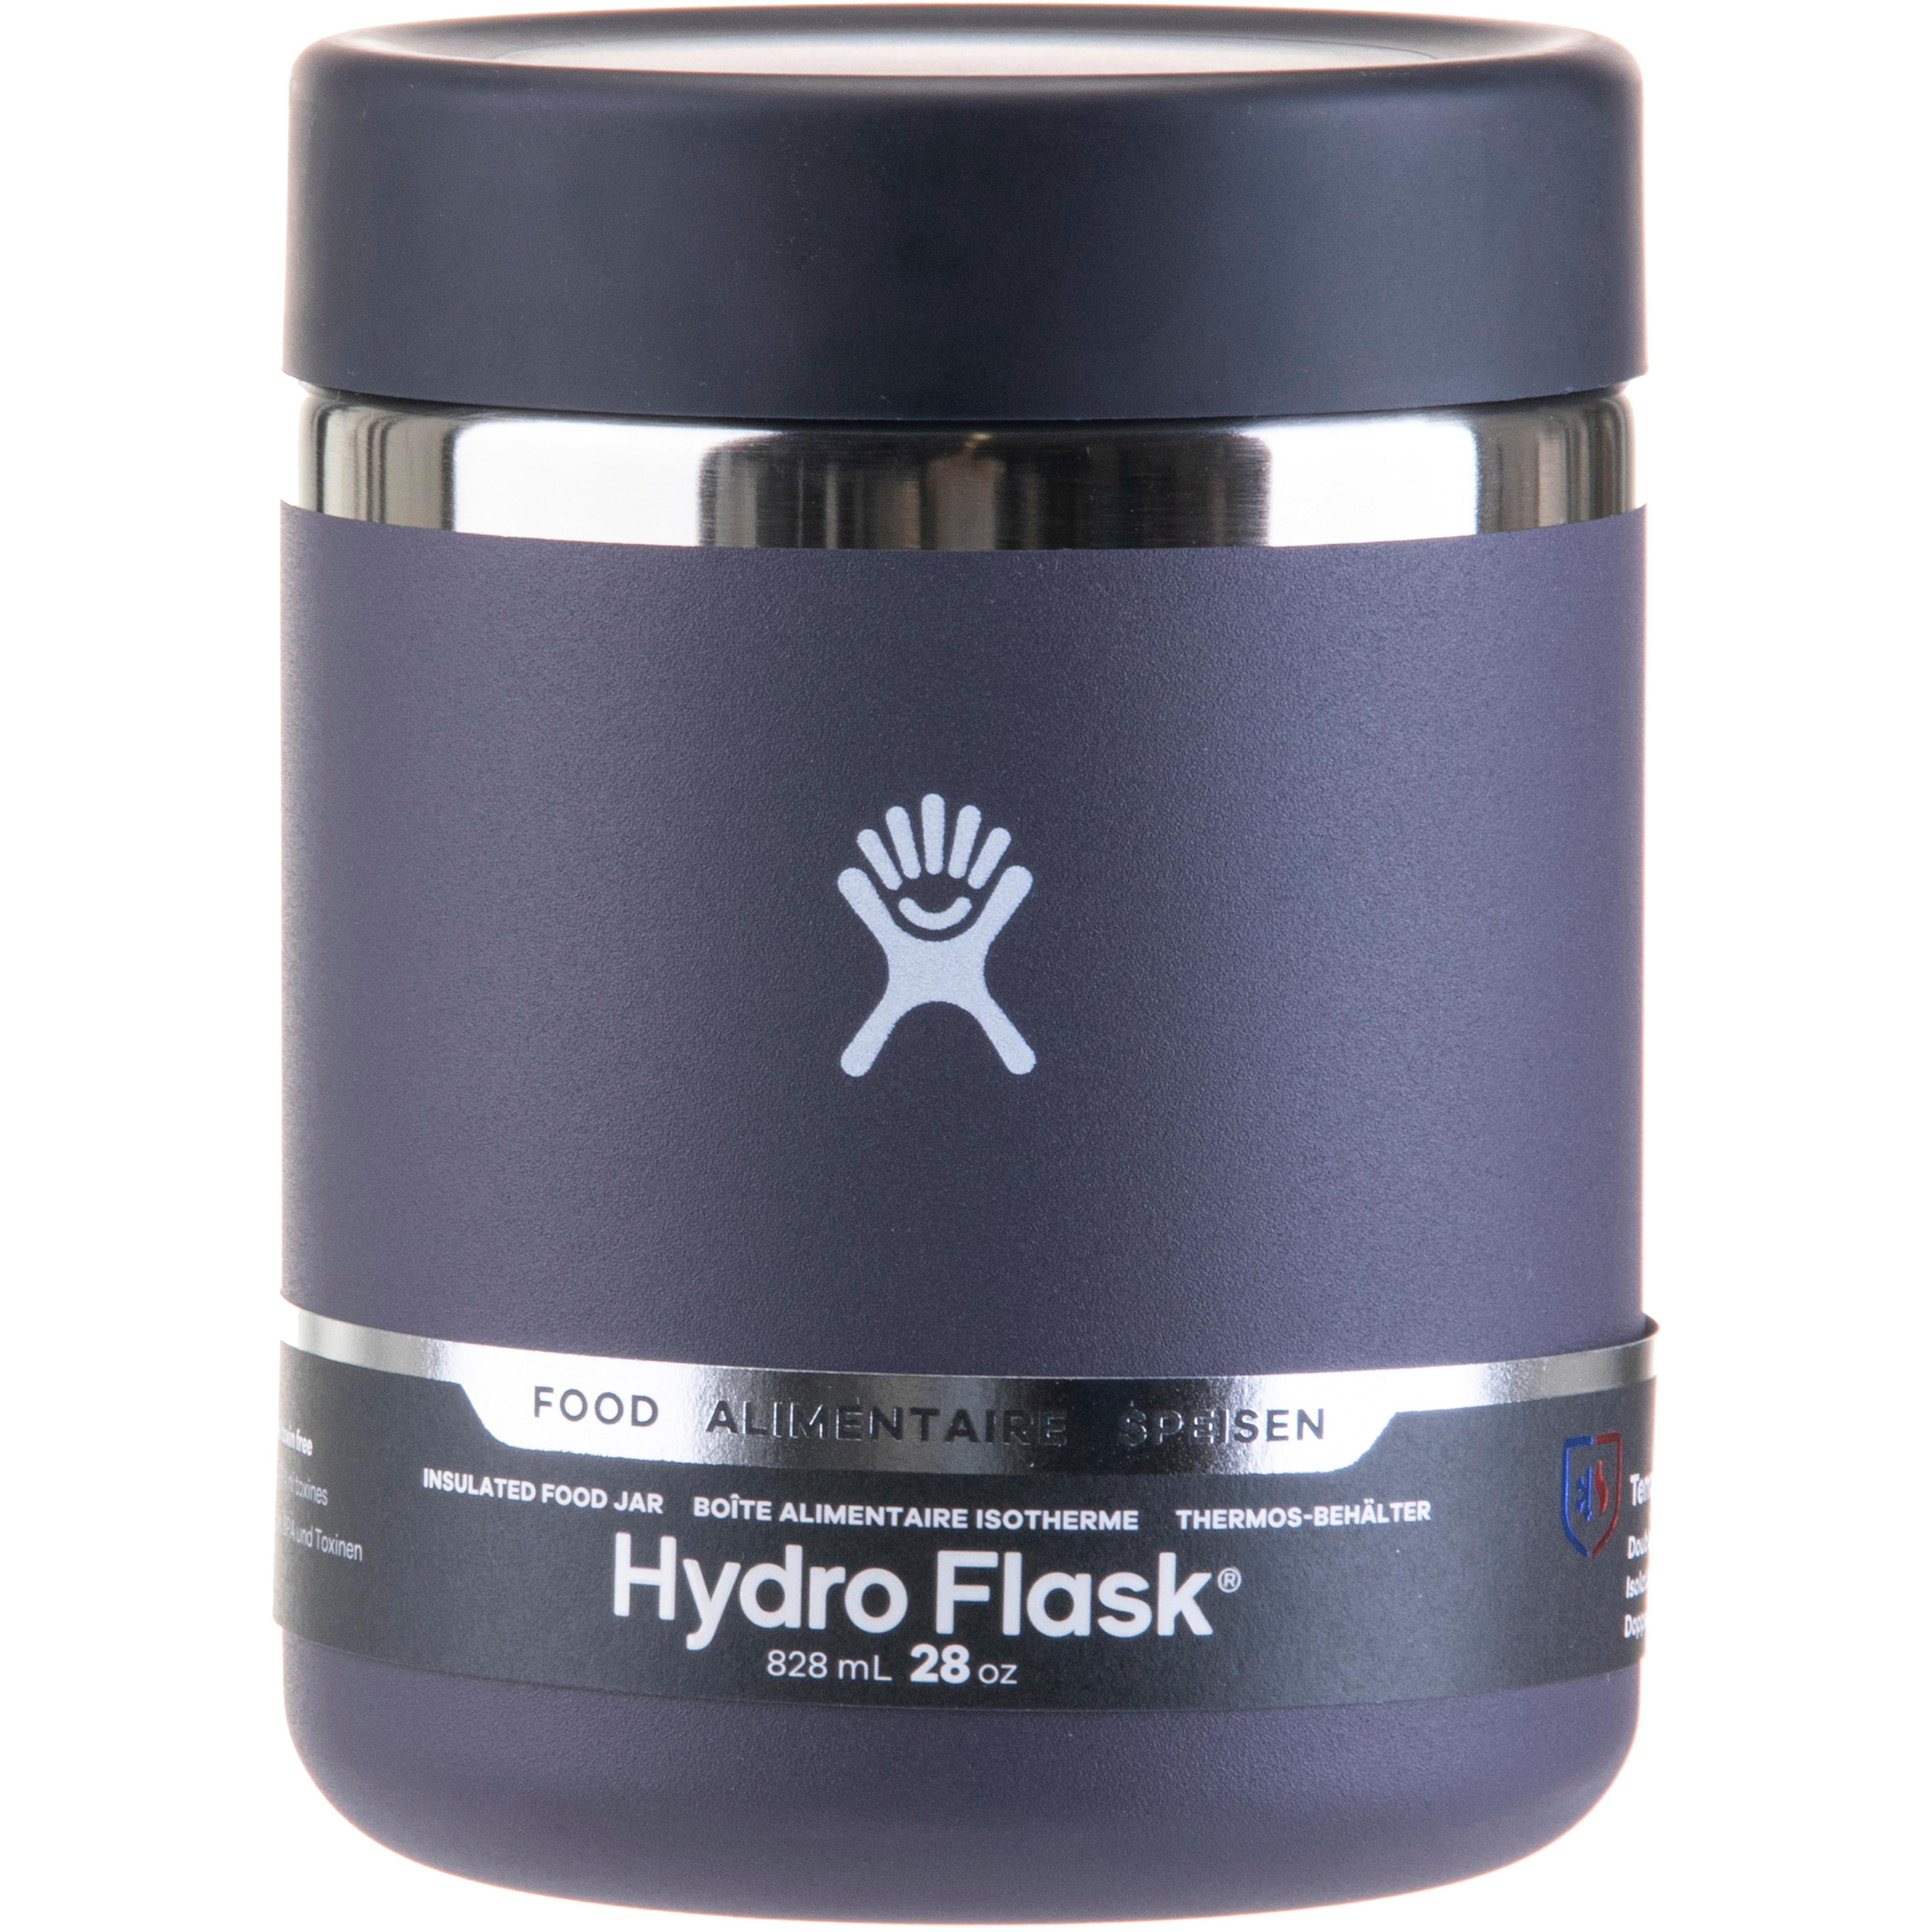 Hydro Flask 28oz Insulated Food Jar in Blackberry